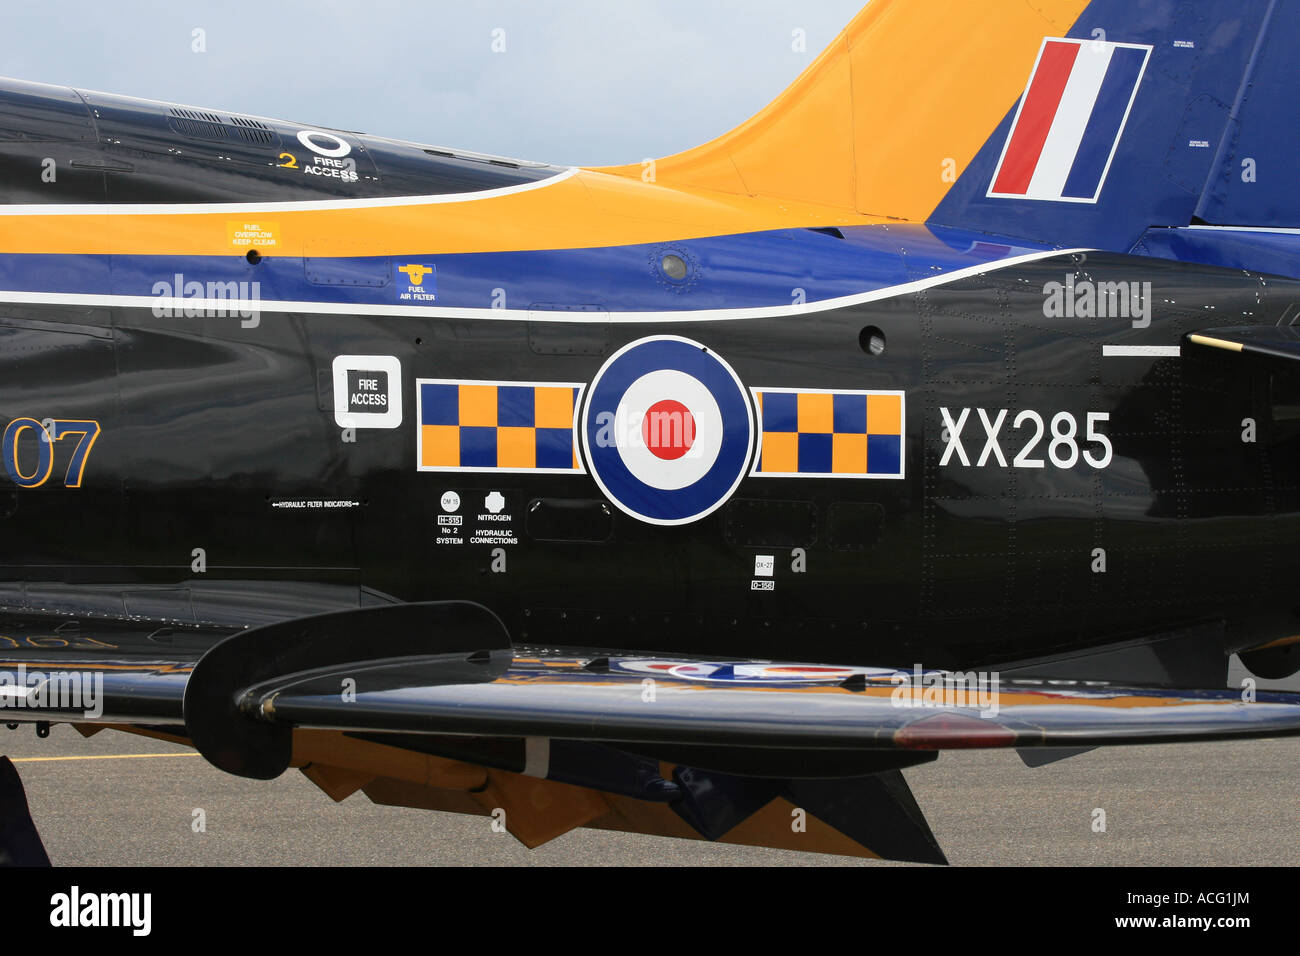 RAF Hawk Jet Trainer Aircraft Stock Photo